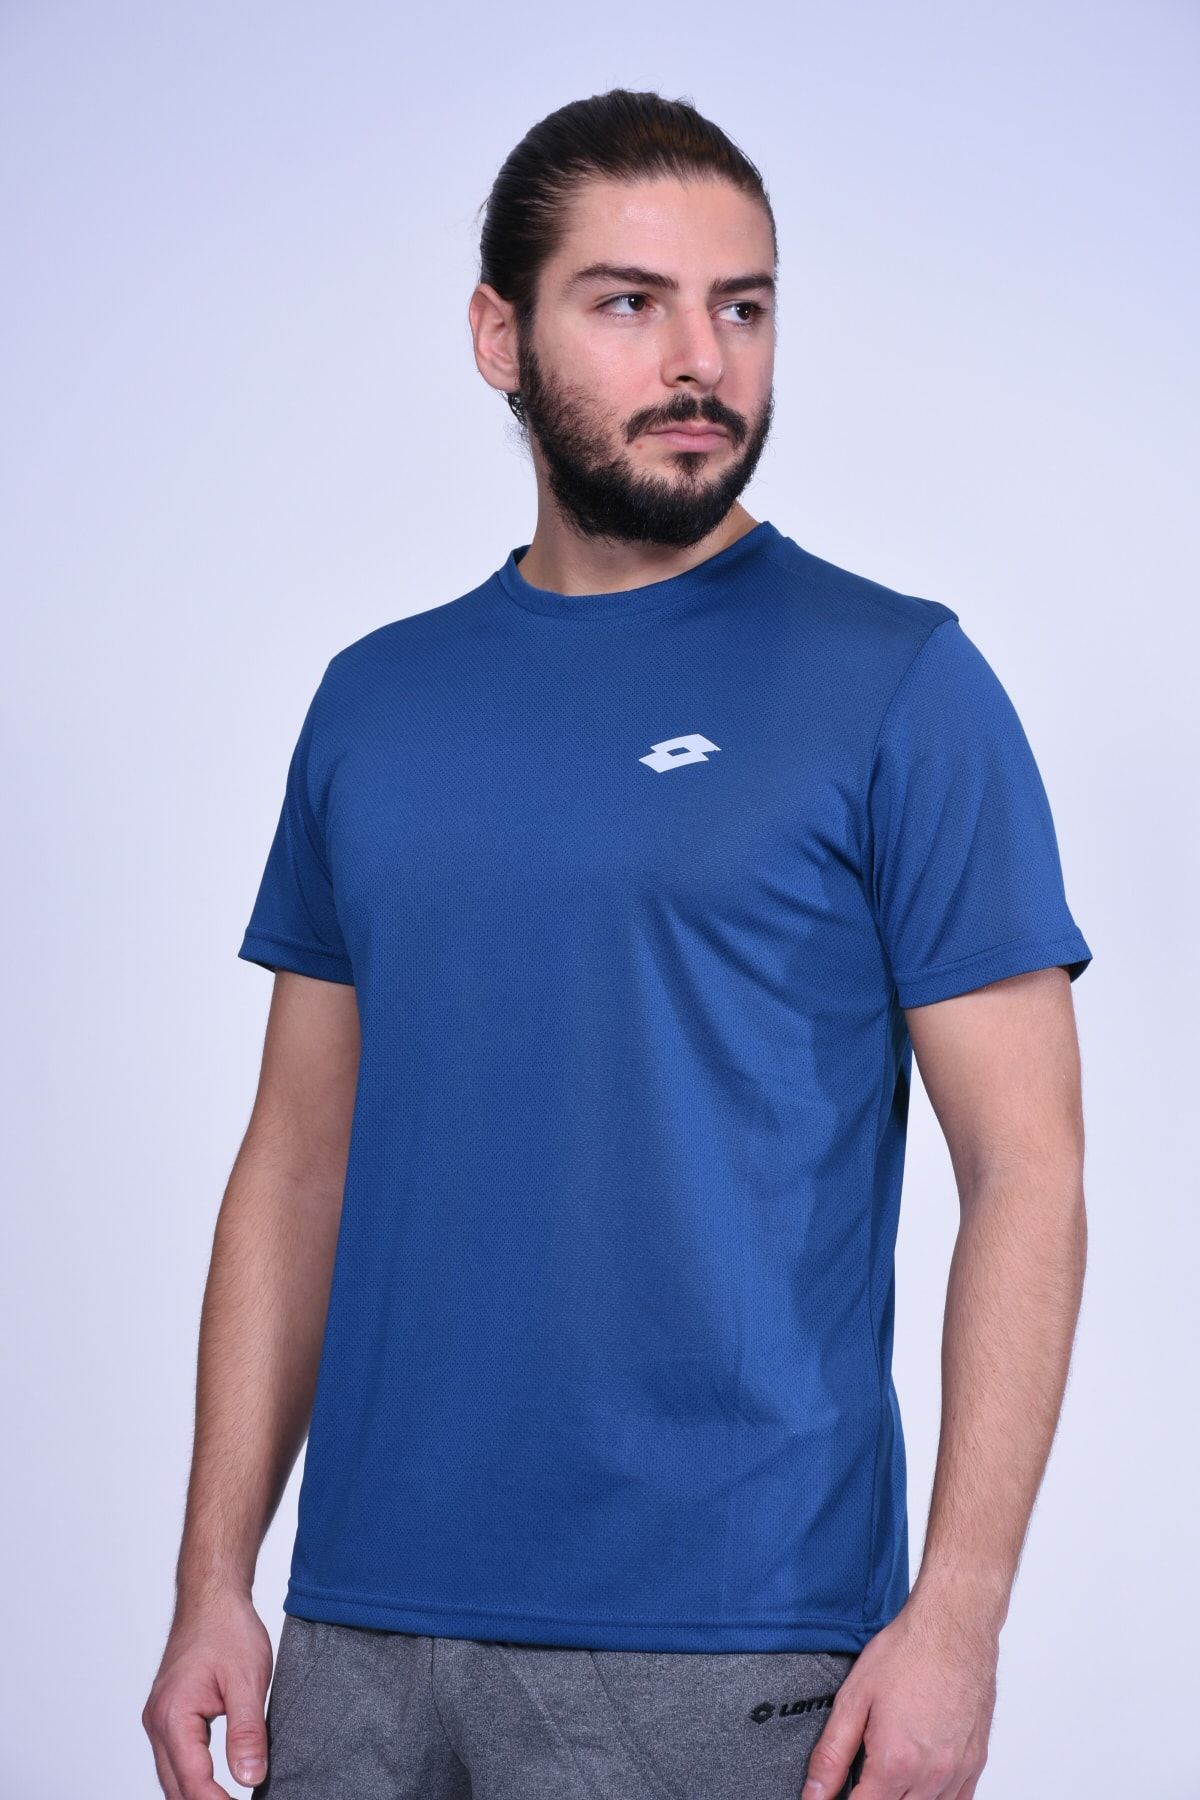 Lotto T-shirt-erkek-petrol Mavi-arhez Tee Pl-r8056